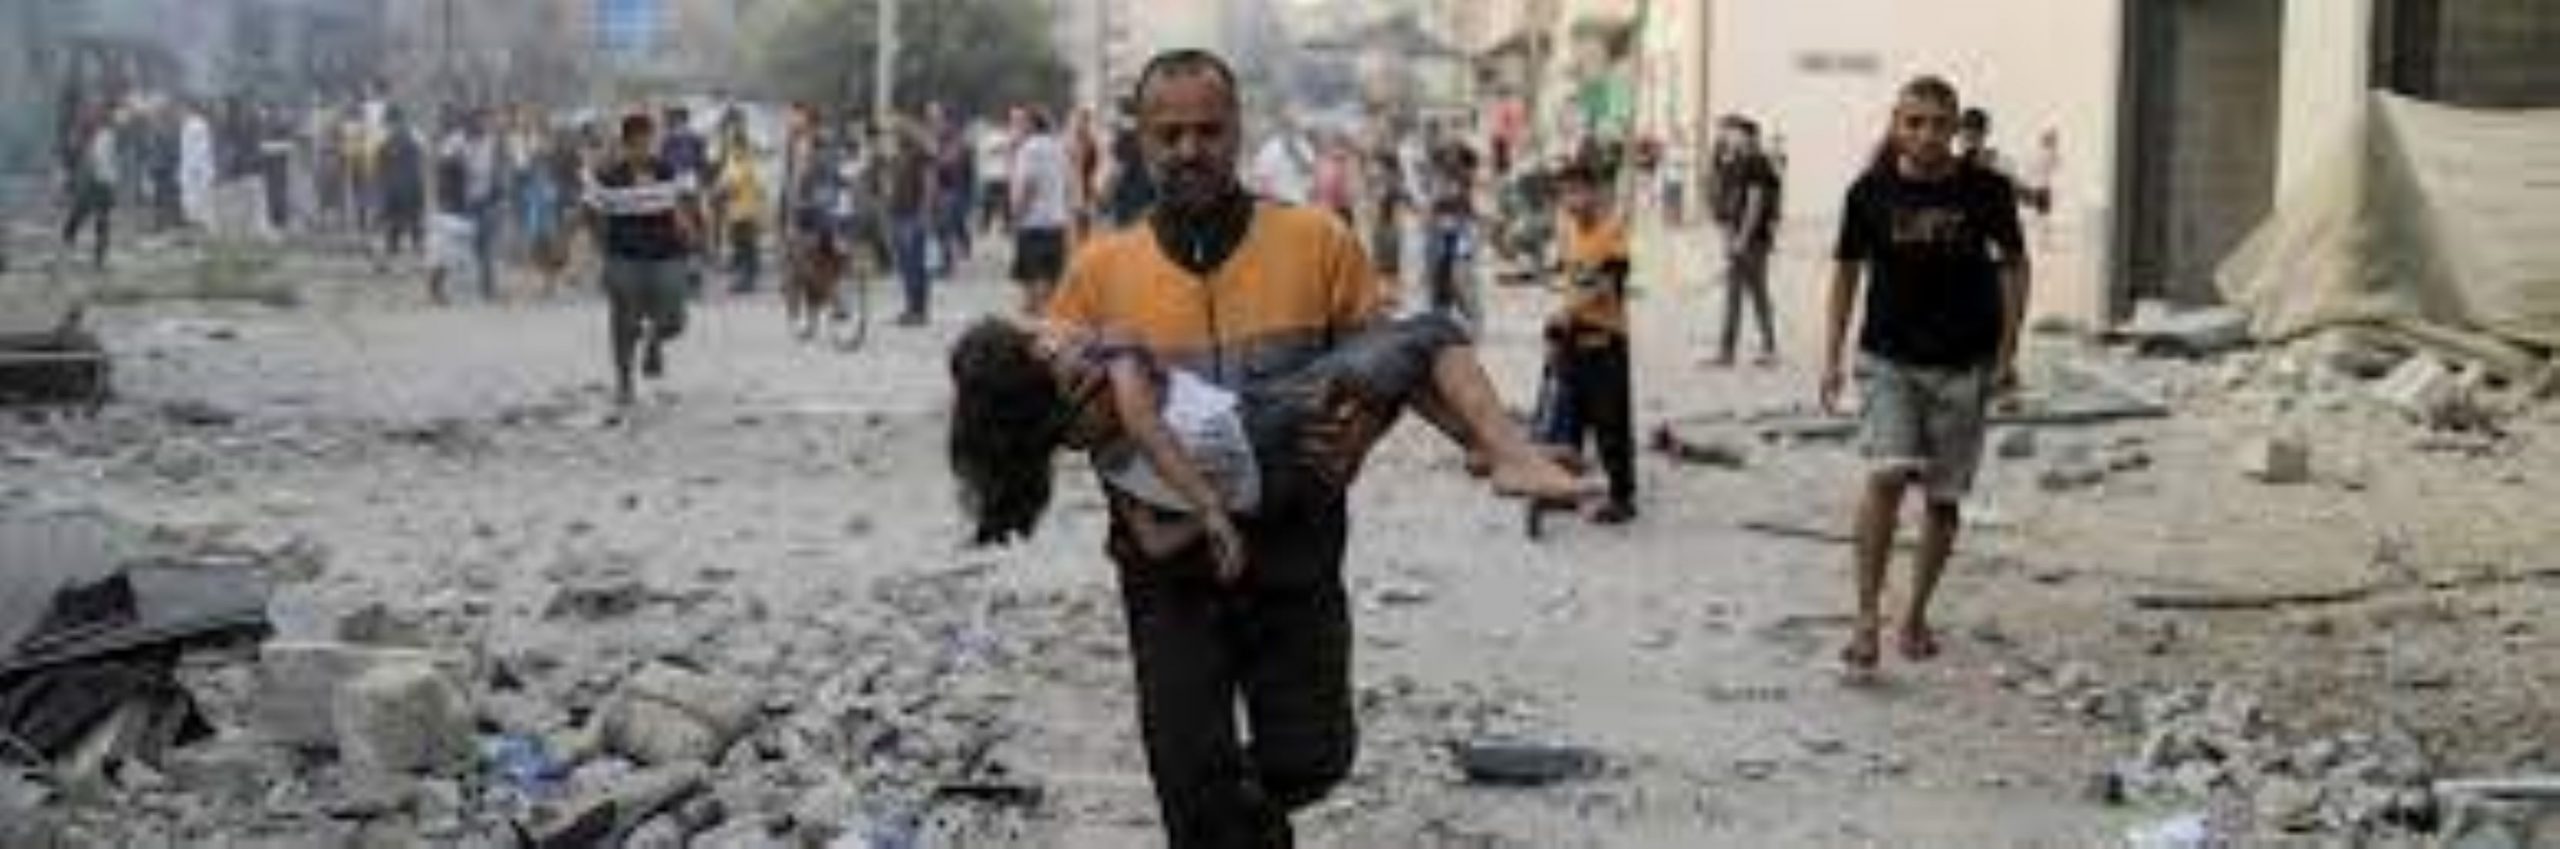 Egyptian, Irish FMs Discuss Efforts To Realise Gaza Ceasefire